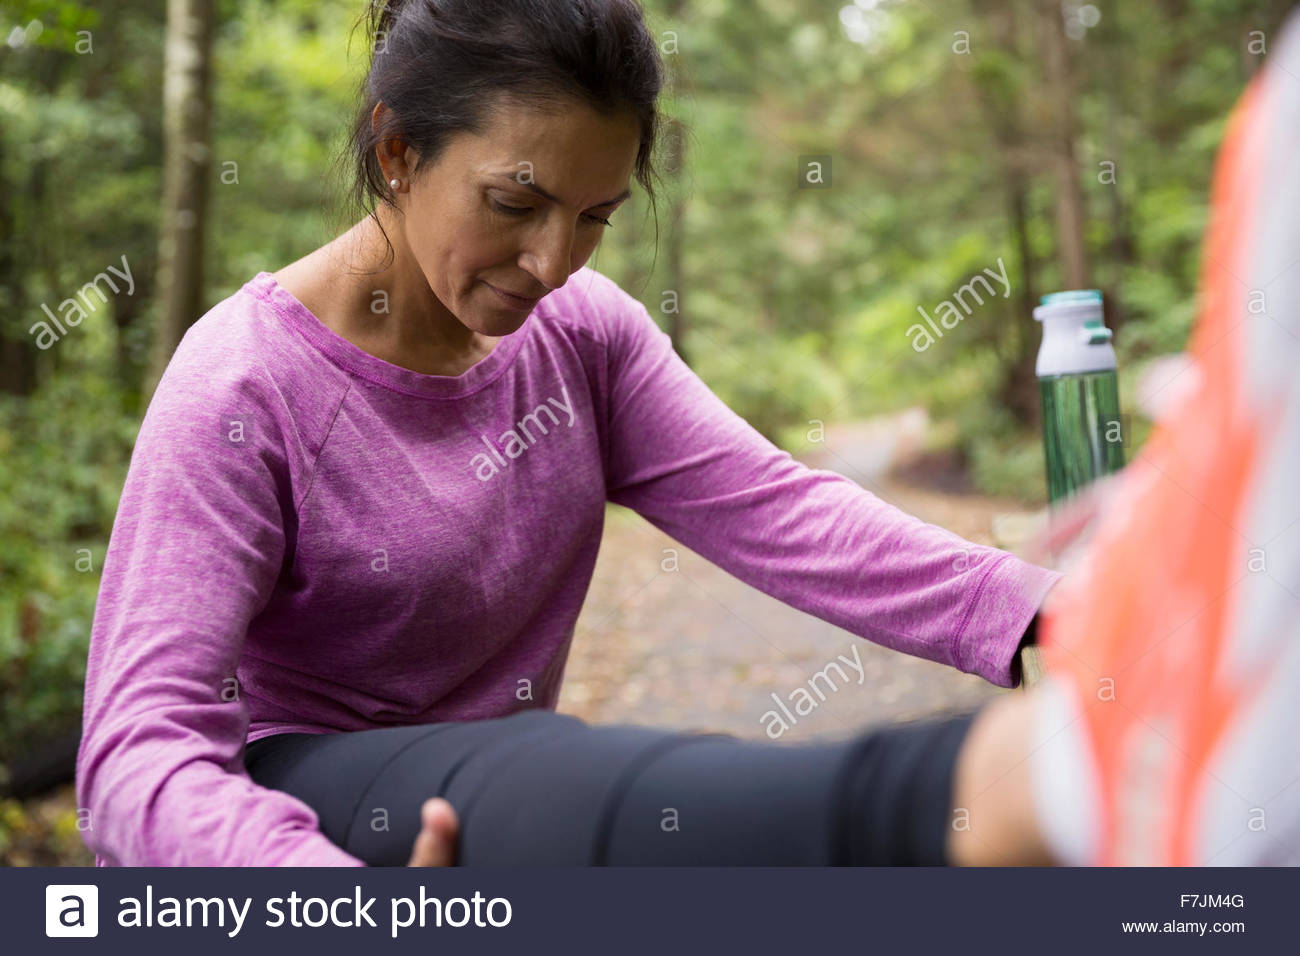 Woman stretching leg preparing for run in woods Stock Photo